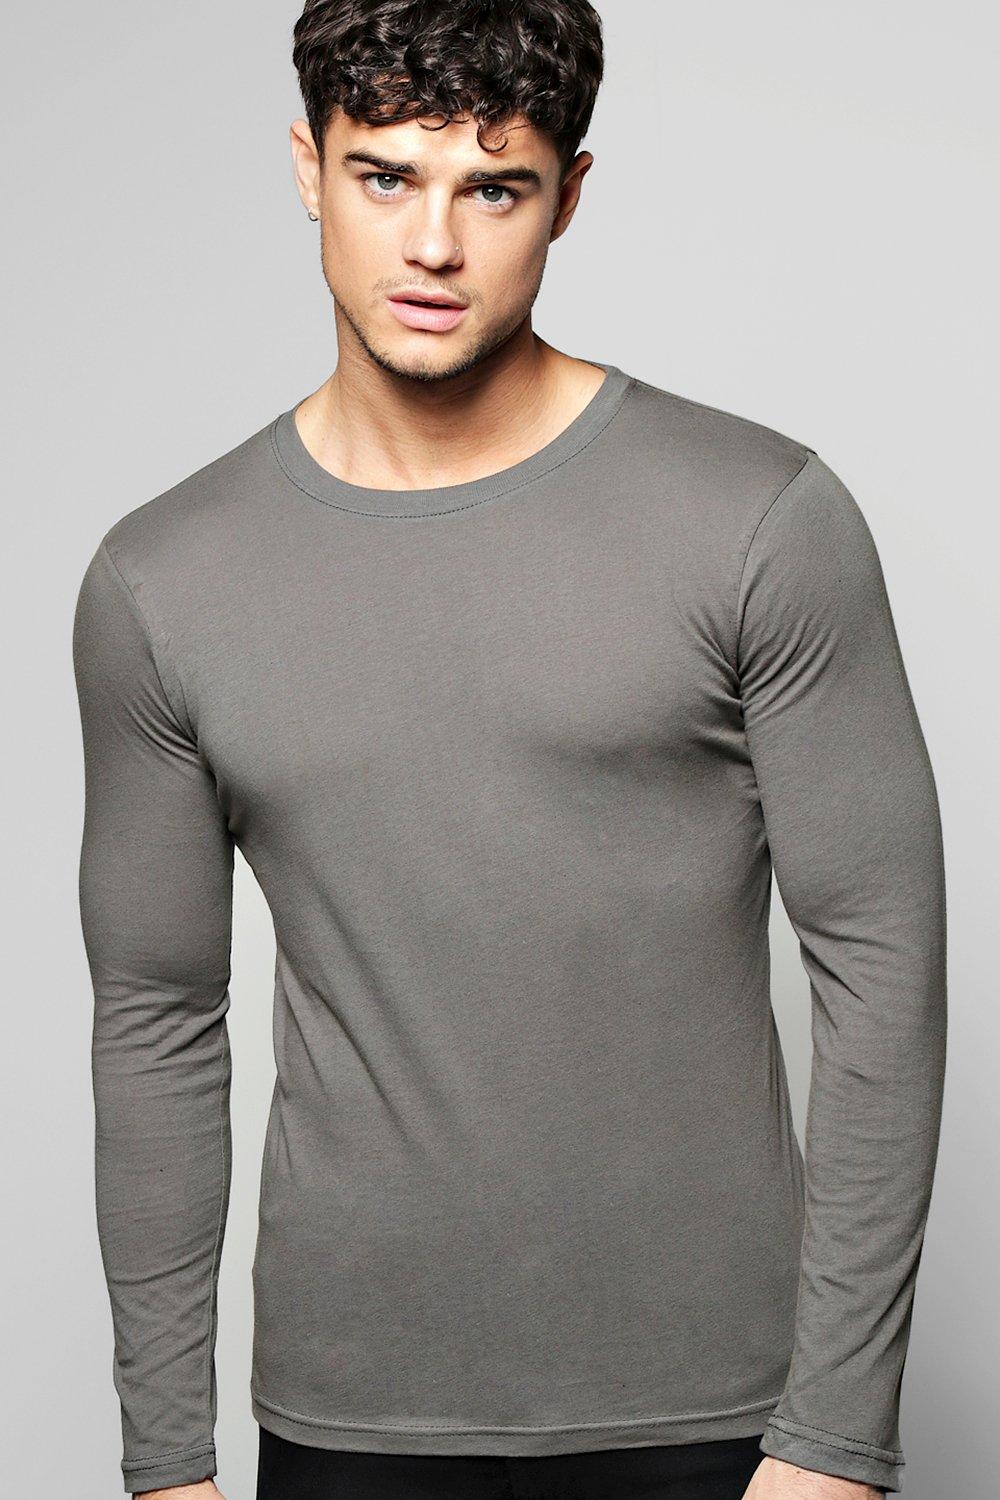 Boohoo Mens Basic Long Sleeve Crew Neck T Shirt | eBay